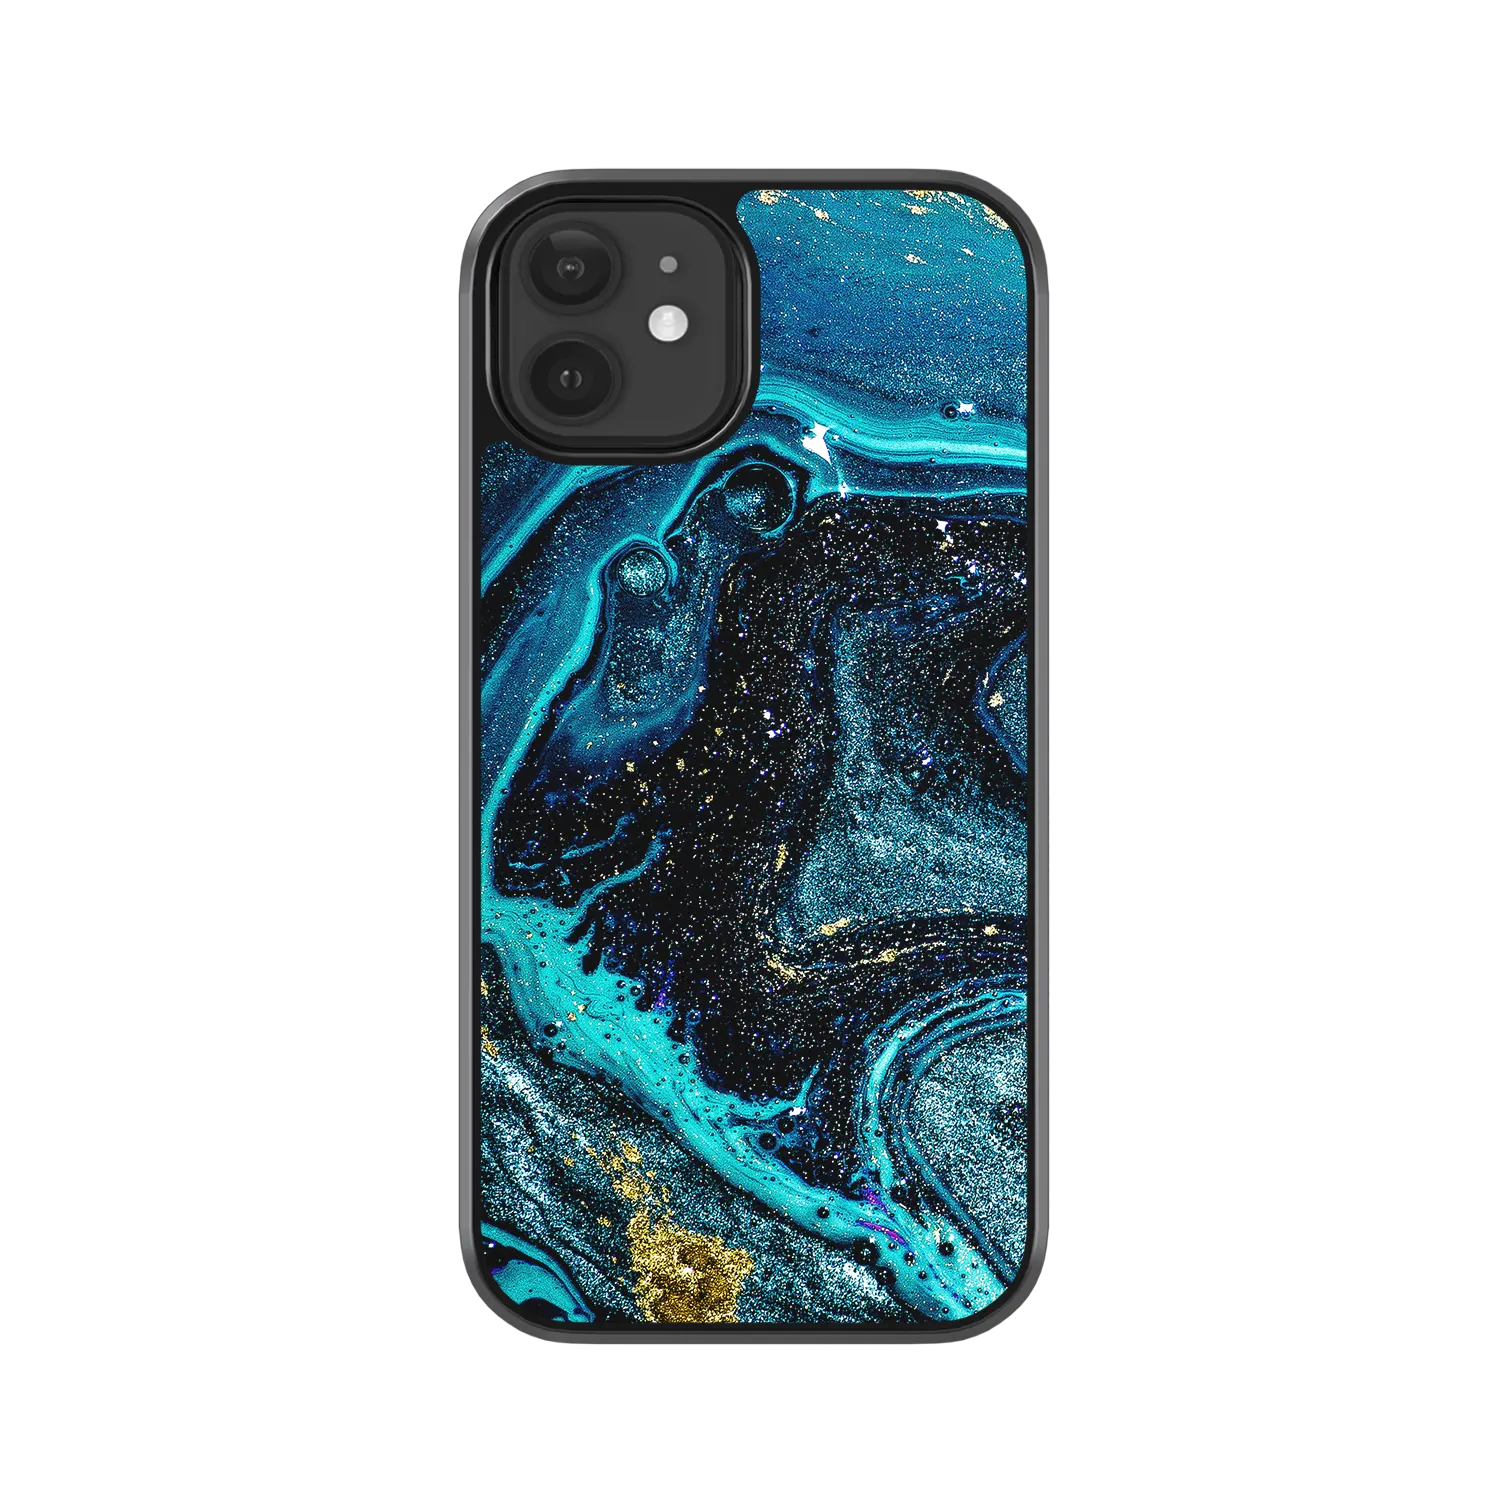 Poseidon iphone 12 cover